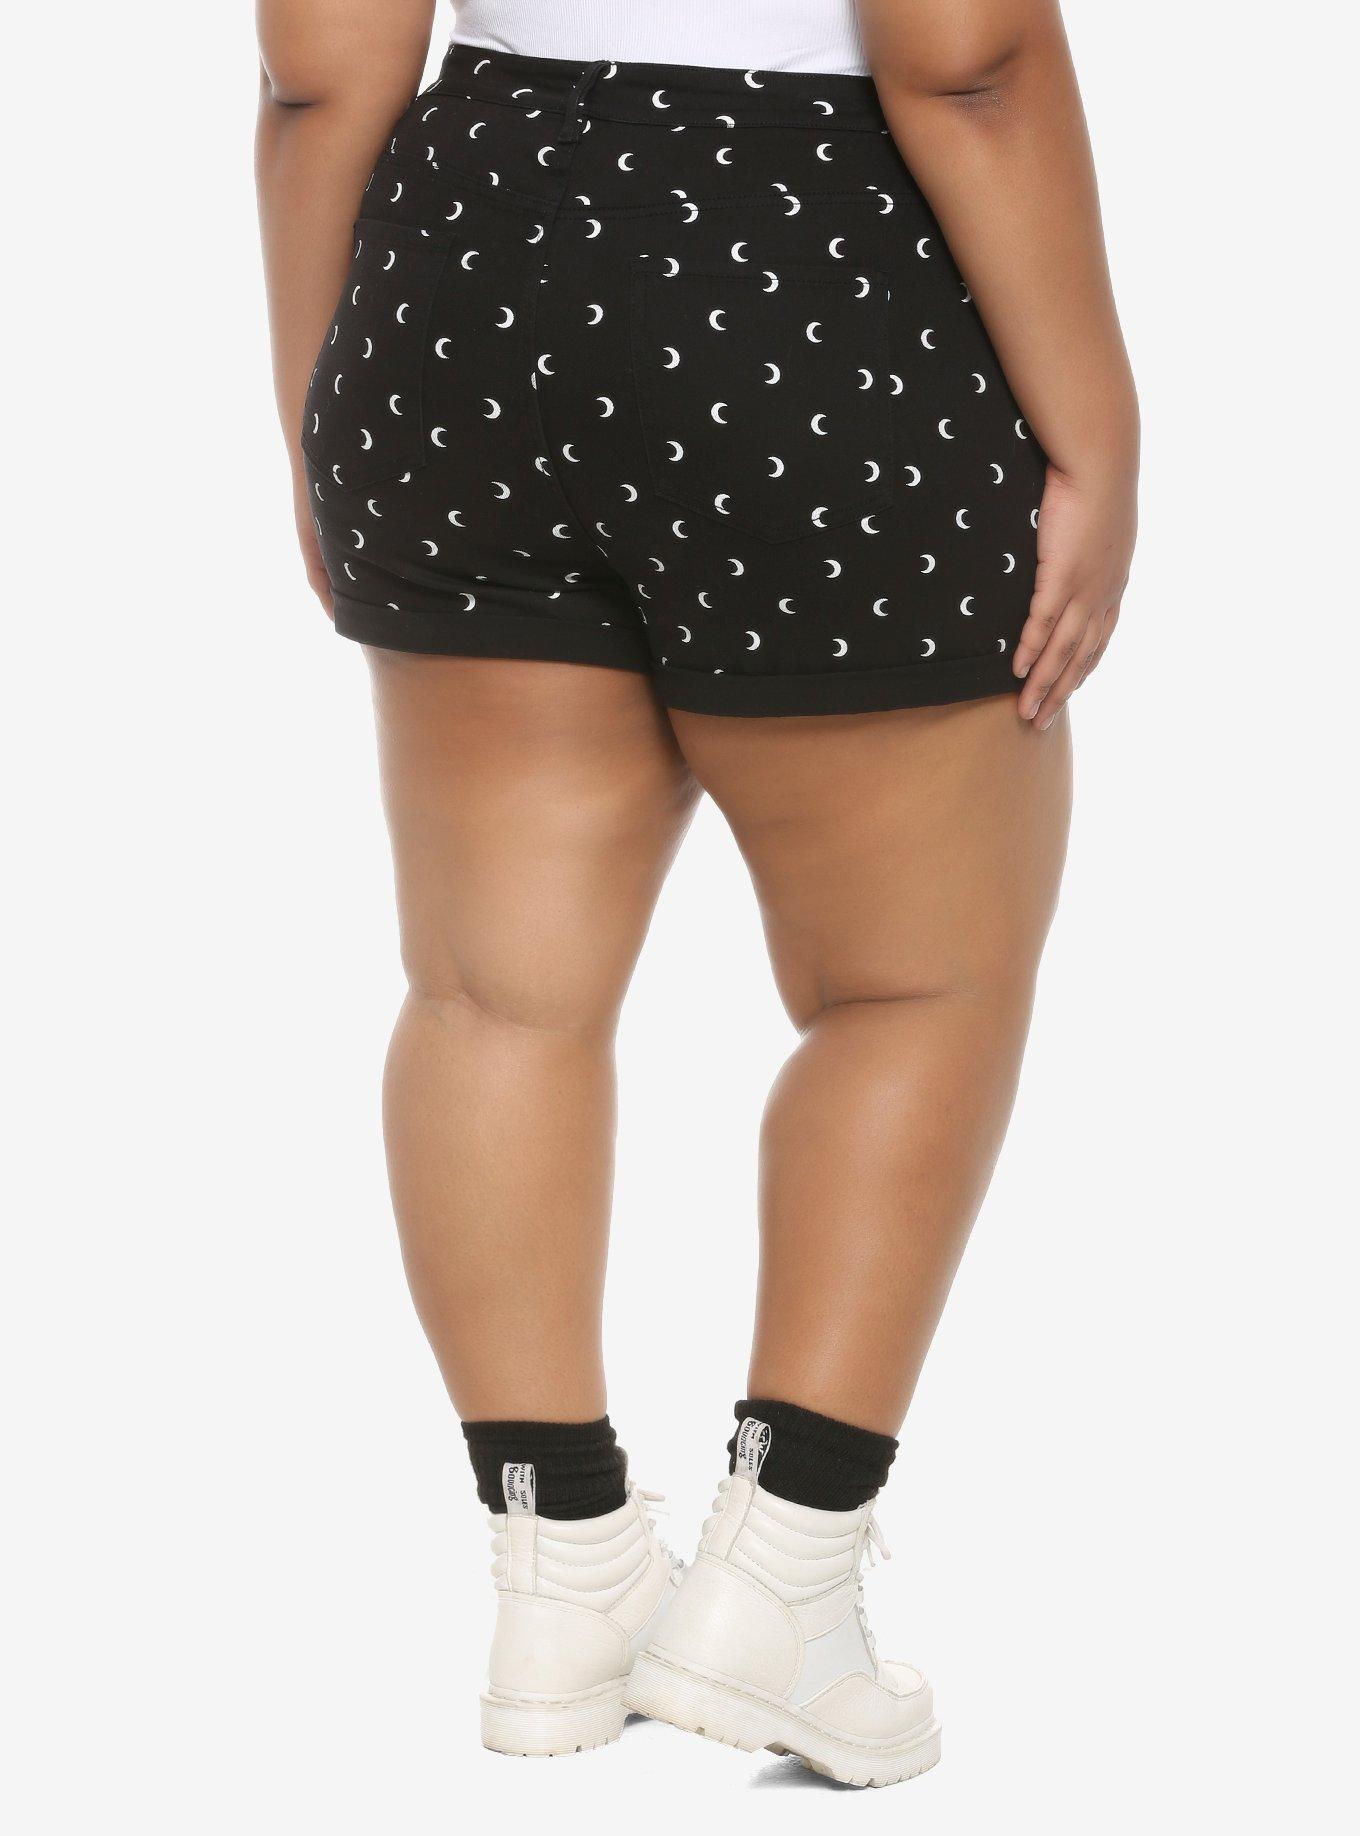 HT Denim Moon Print Ultra Hi-Rise Button-Front Shorts Plus Size, MOON AND STARS, alternate